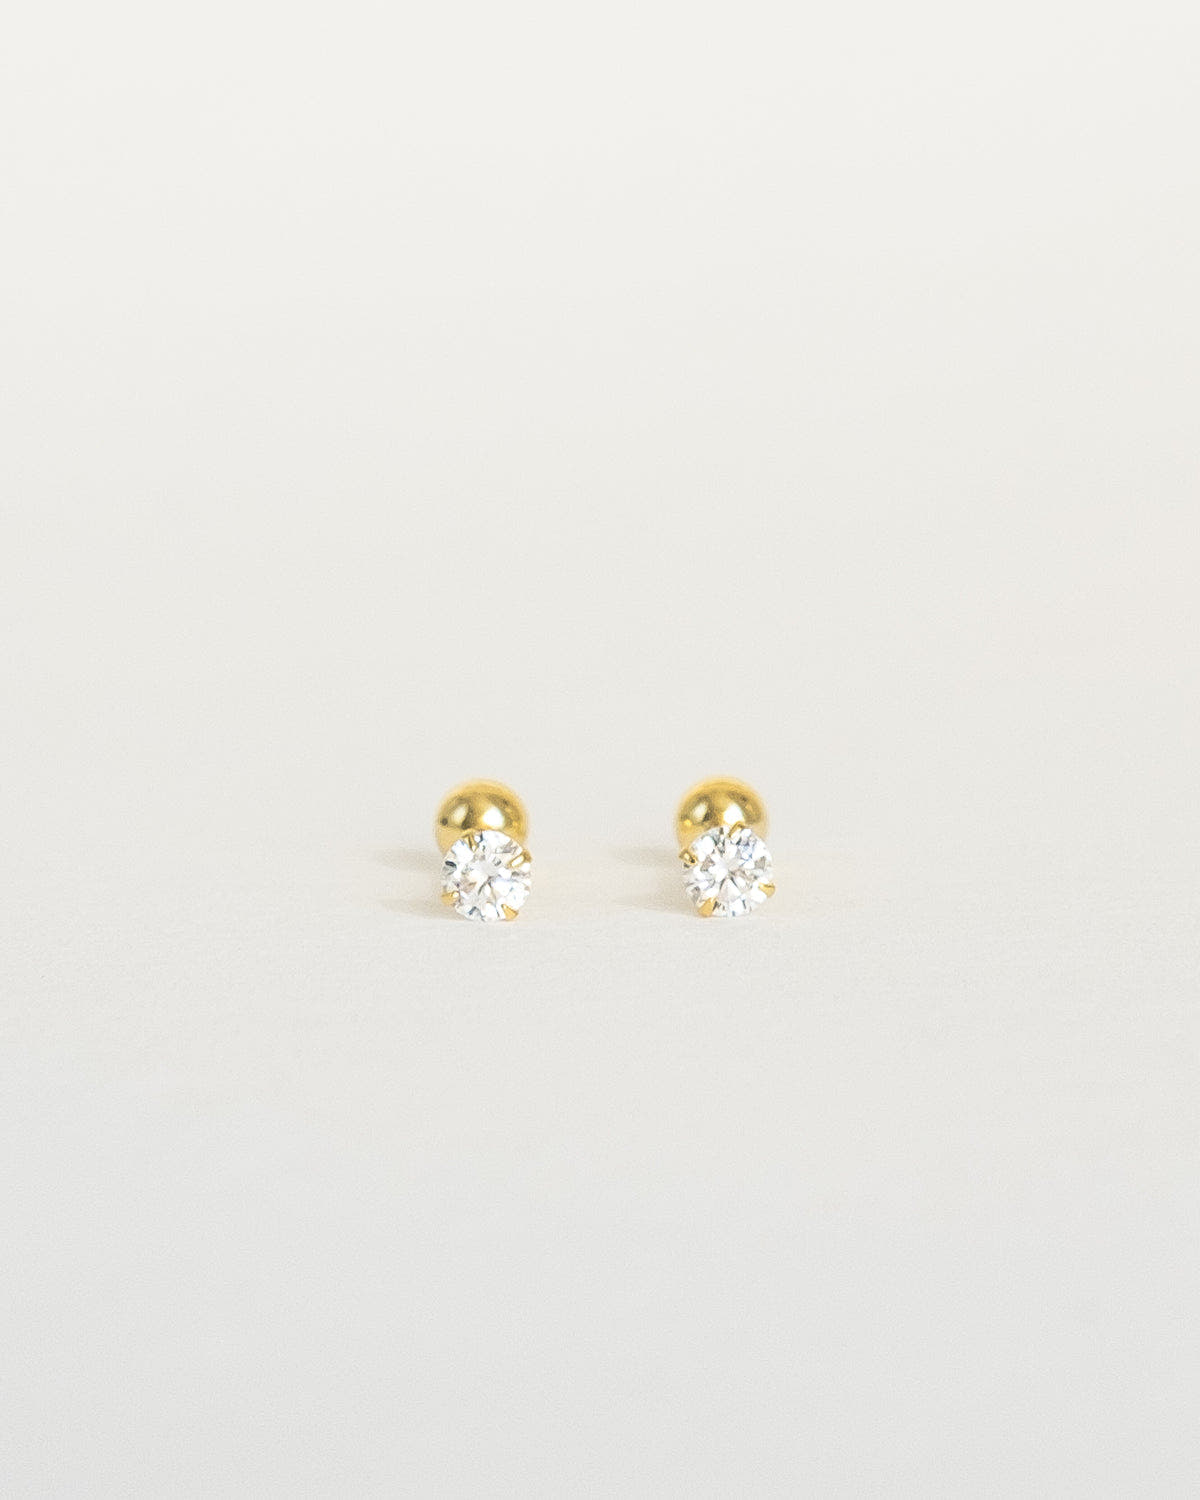 Teeny tiny 18k gold stud earrings with screw back ball